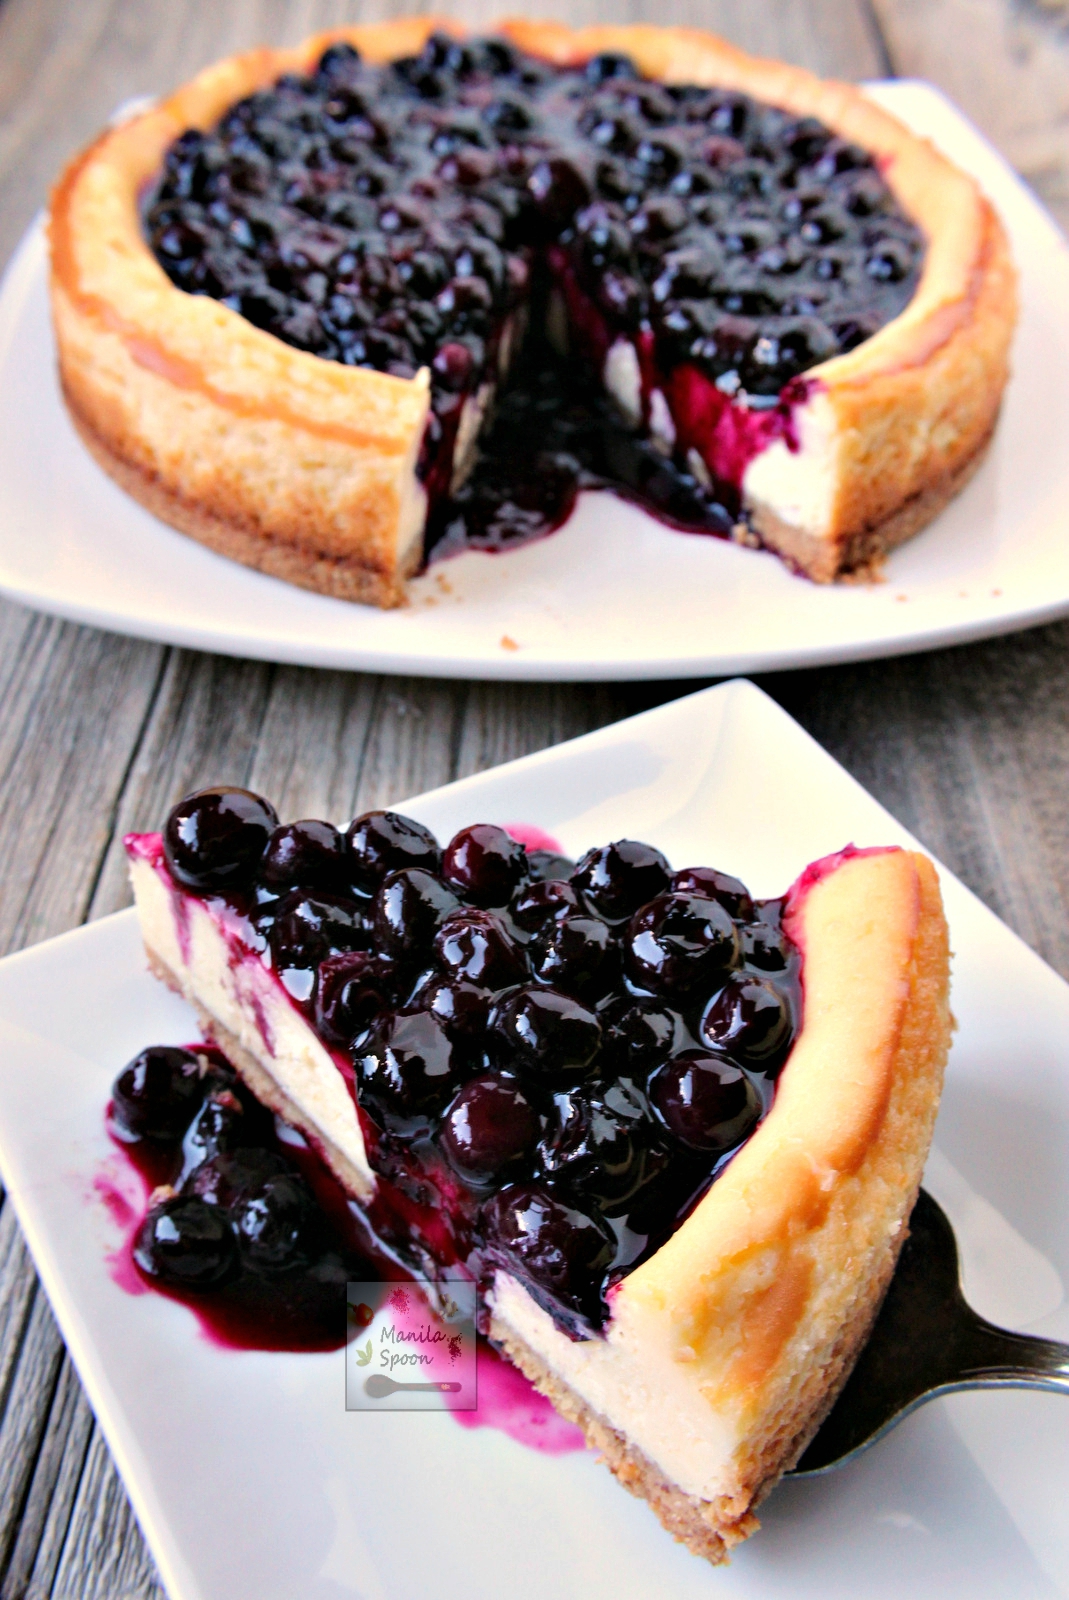 Yummy Blueberry Cheesecake | Manila Spoon